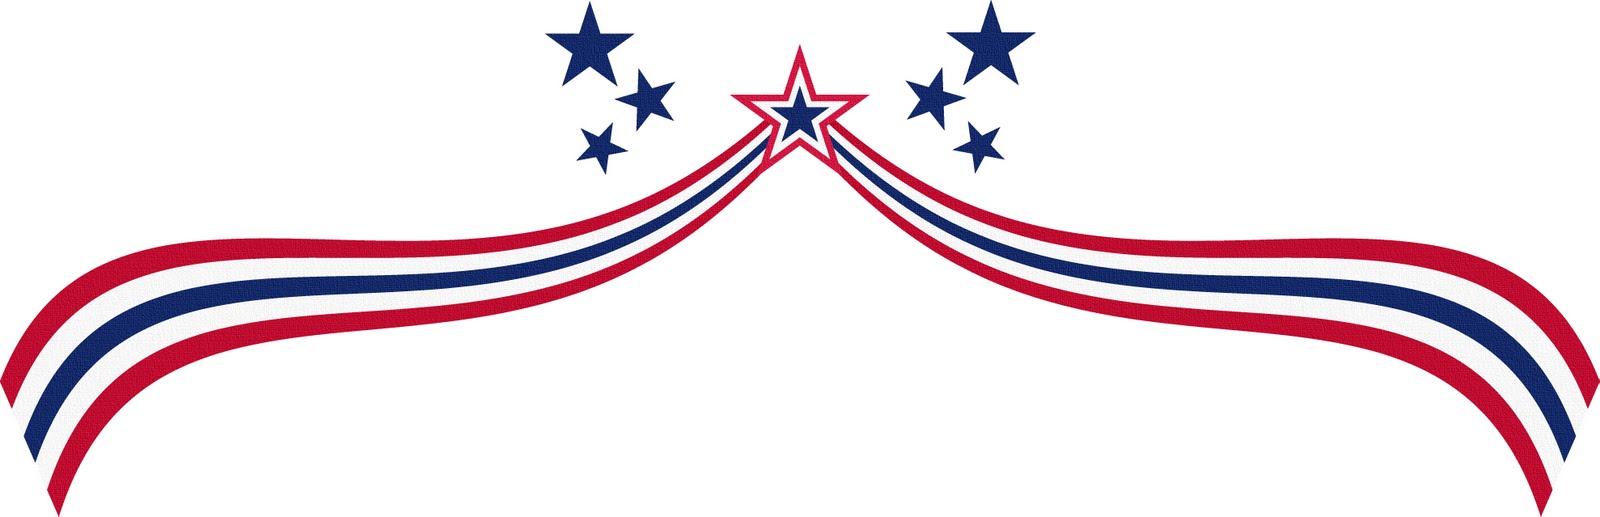 Flag Design